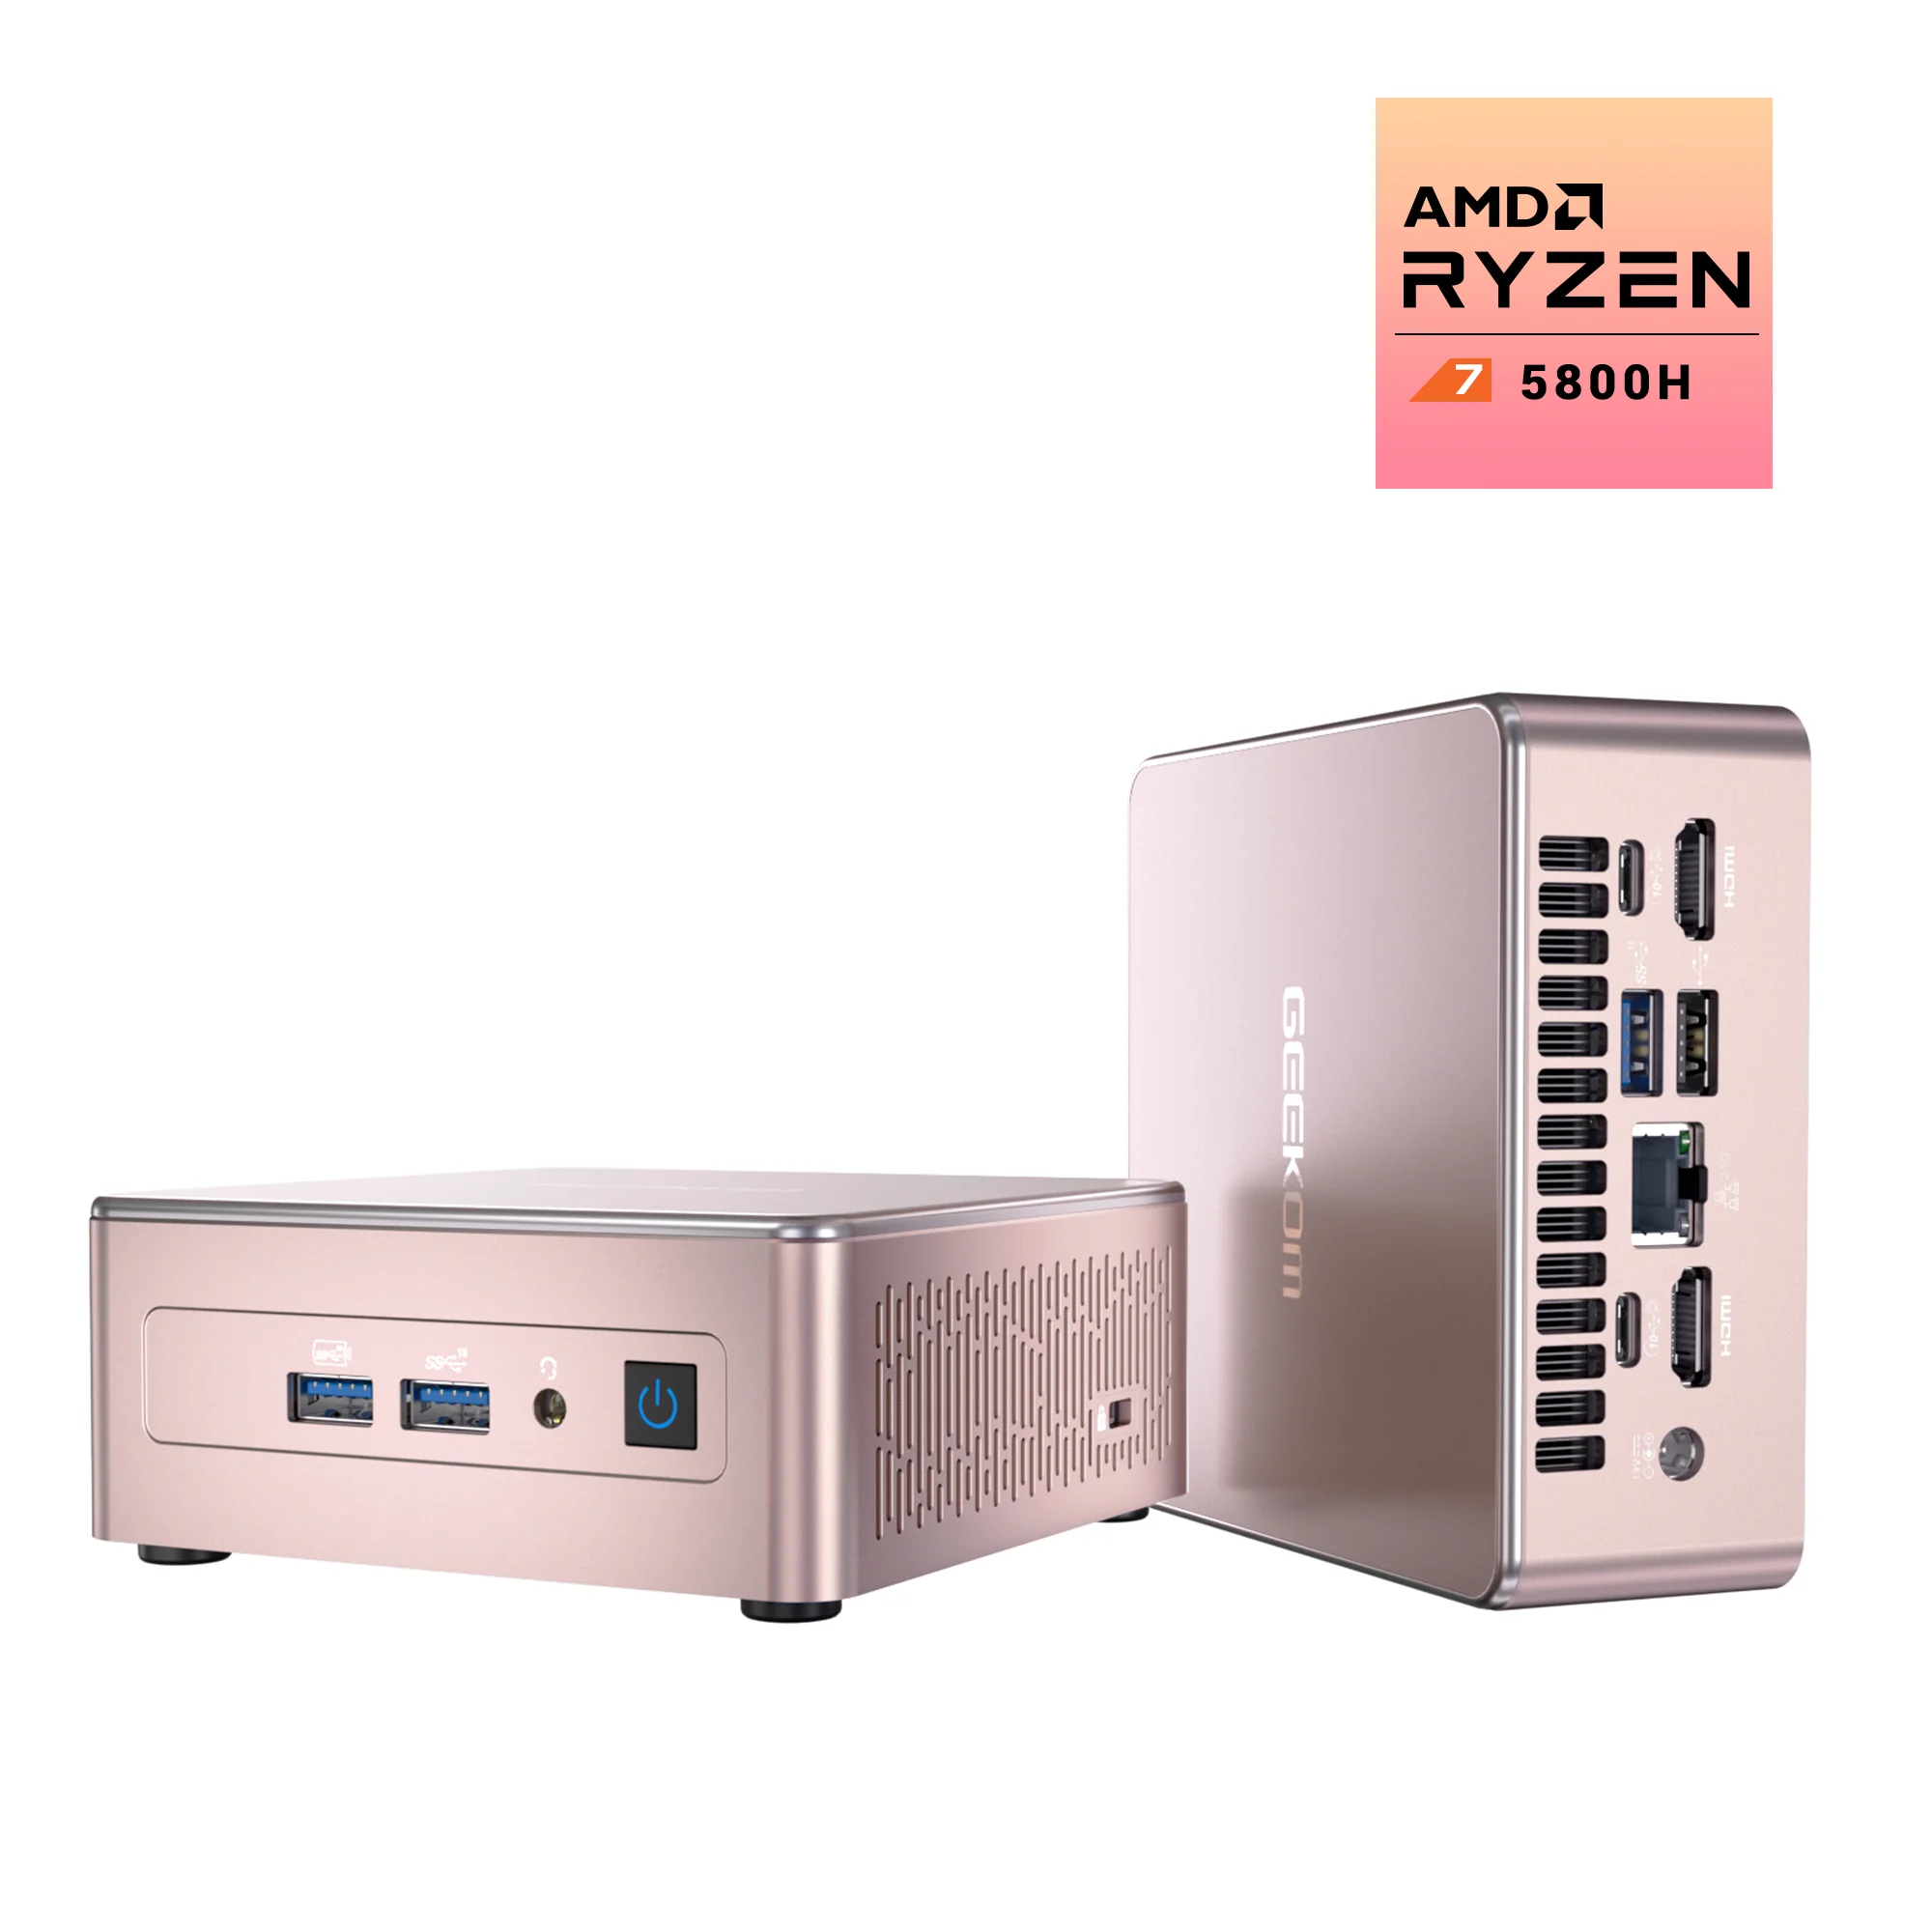 GEEKOM A5 Mini PC AMD Ryzen 7 5800H - GEEKOM